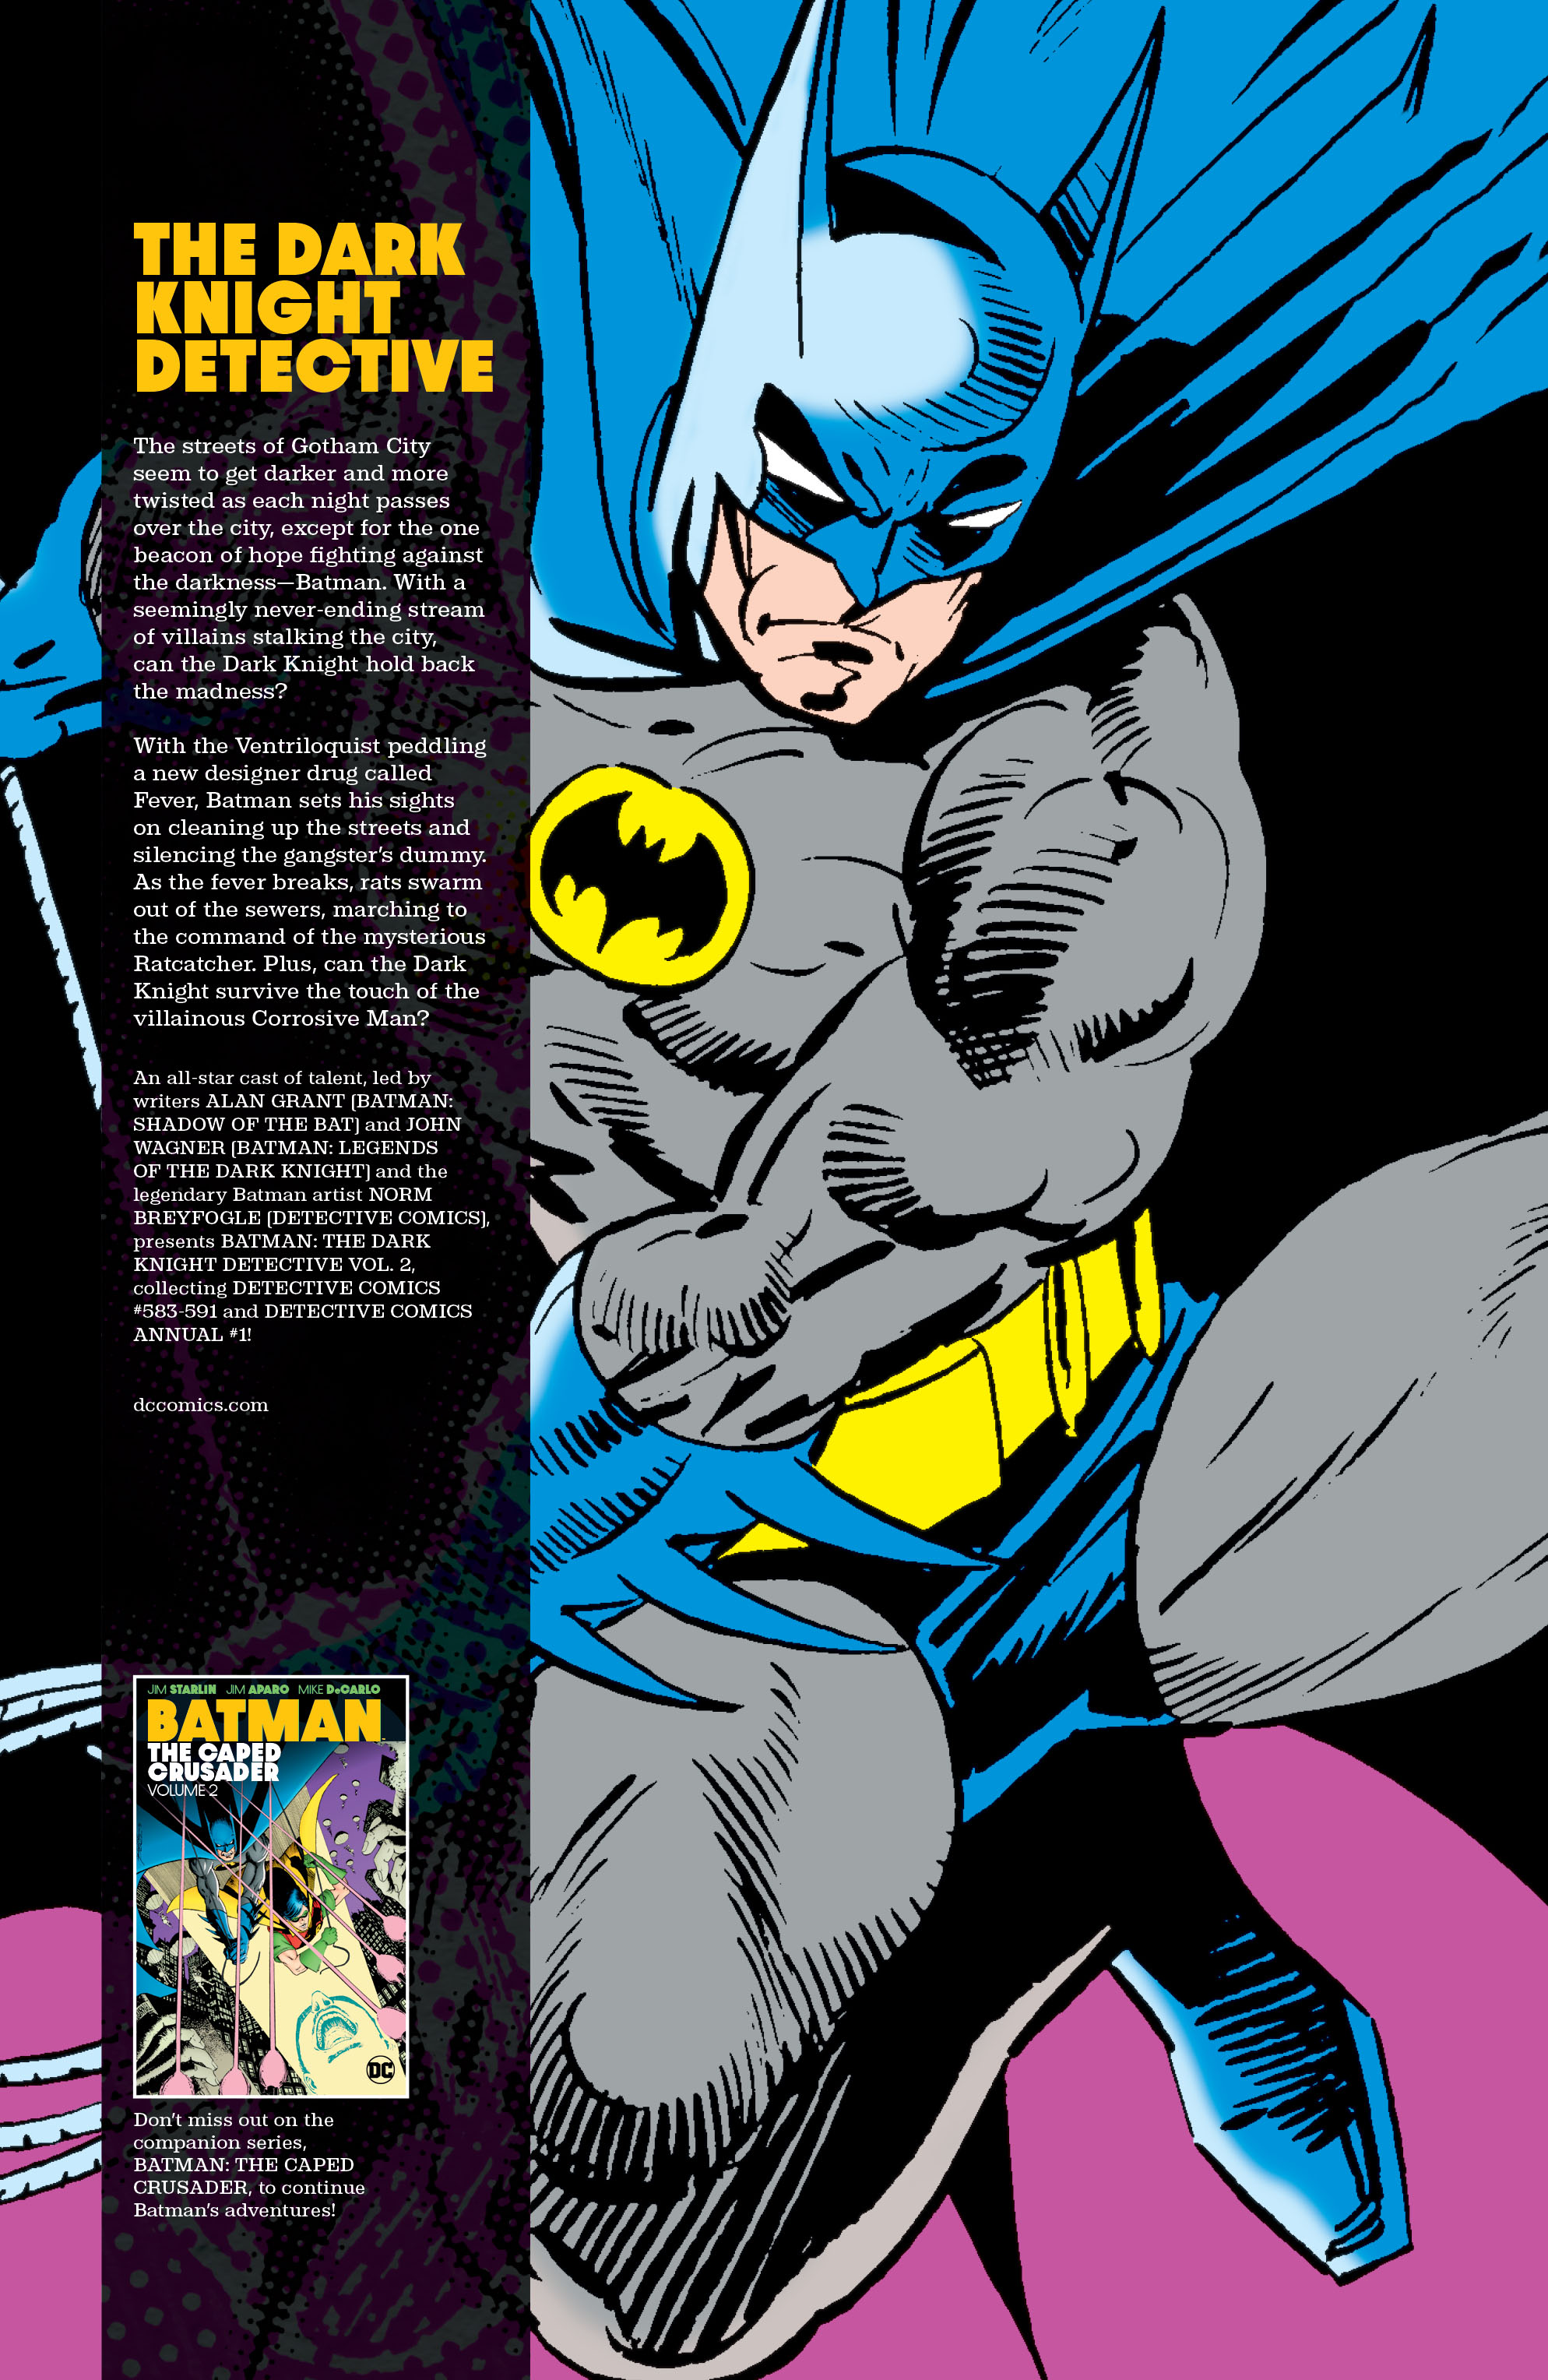 Detective Comics 1937 Tpb Batman The Dark Knight Detective 2 Part 1 | Read  Detective Comics 1937 Tpb Batman The Dark Knight Detective 2 Part 1 comic  online in high quality. Read